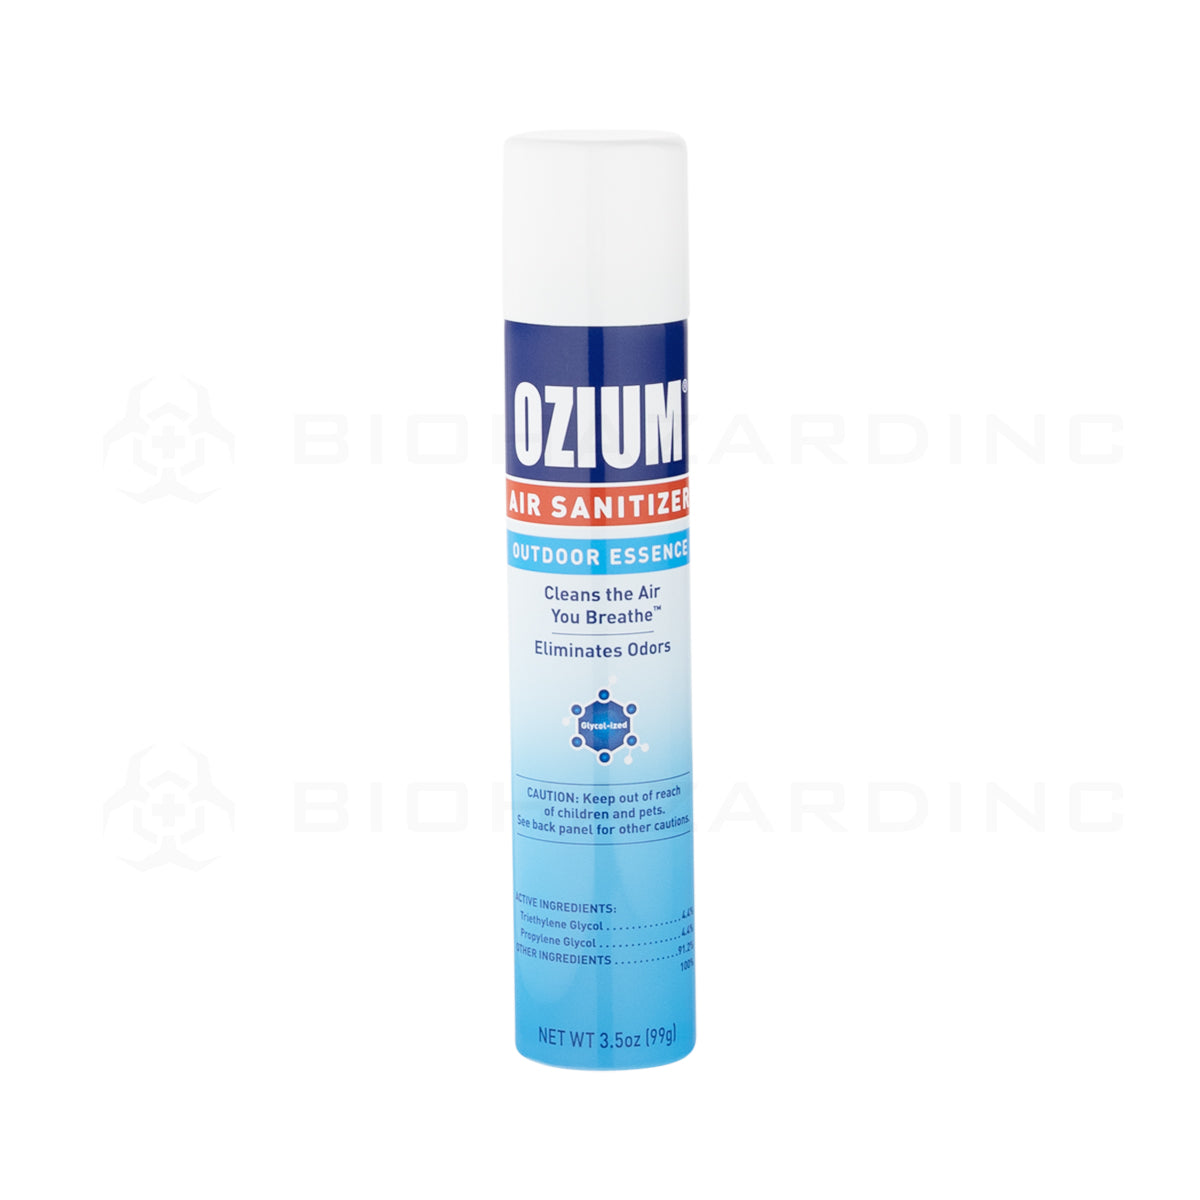 OZIUM® | Outdoor Essence Scent Air Sanitizer - Various Sizes Air Freshener Biohazard Inc 3.5 oz  